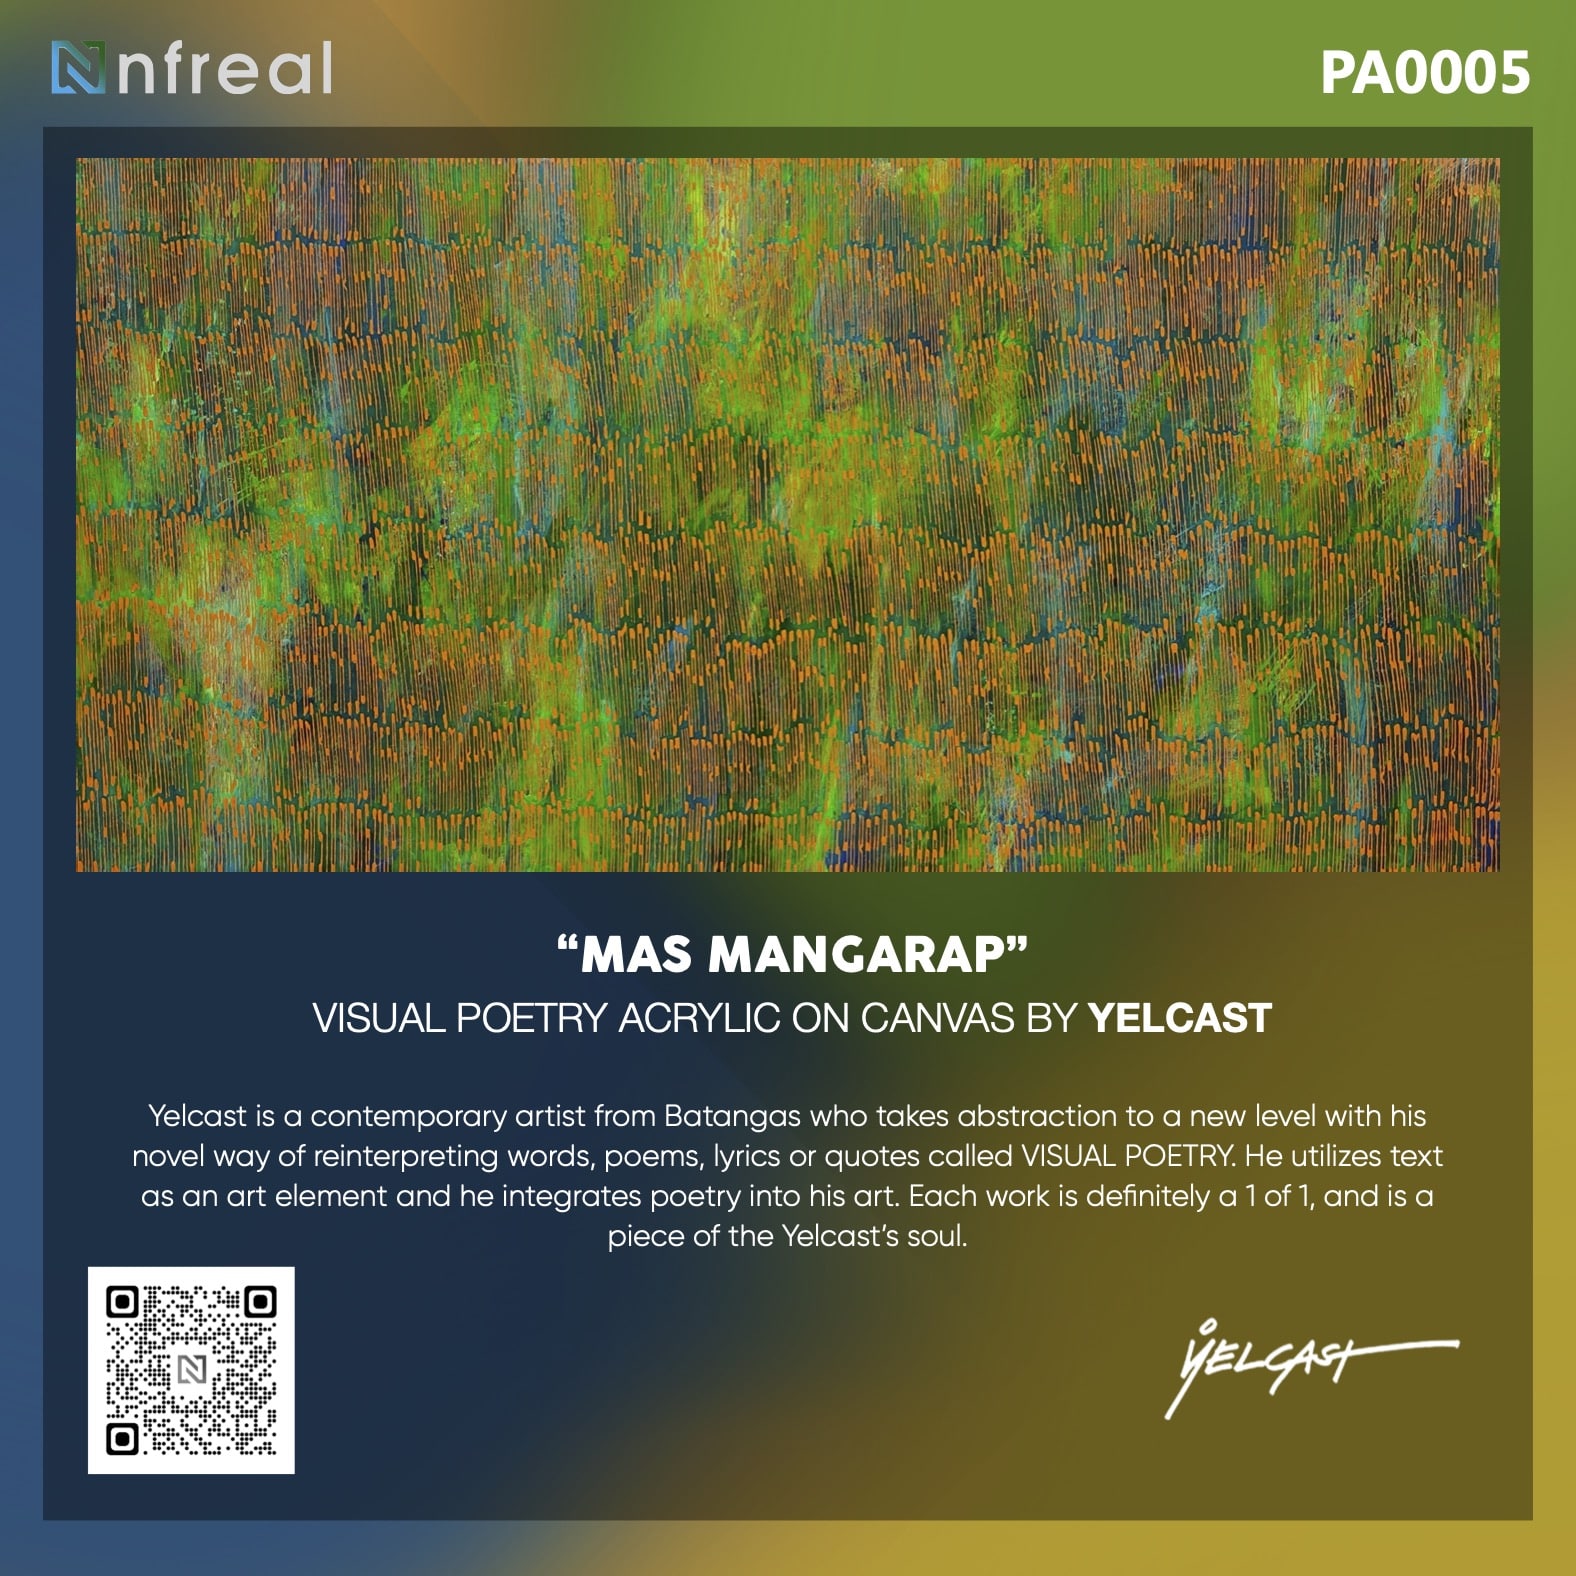 Photo of Mas Mangarap Visual Poetry Acrylic on Canvas by Yelcast